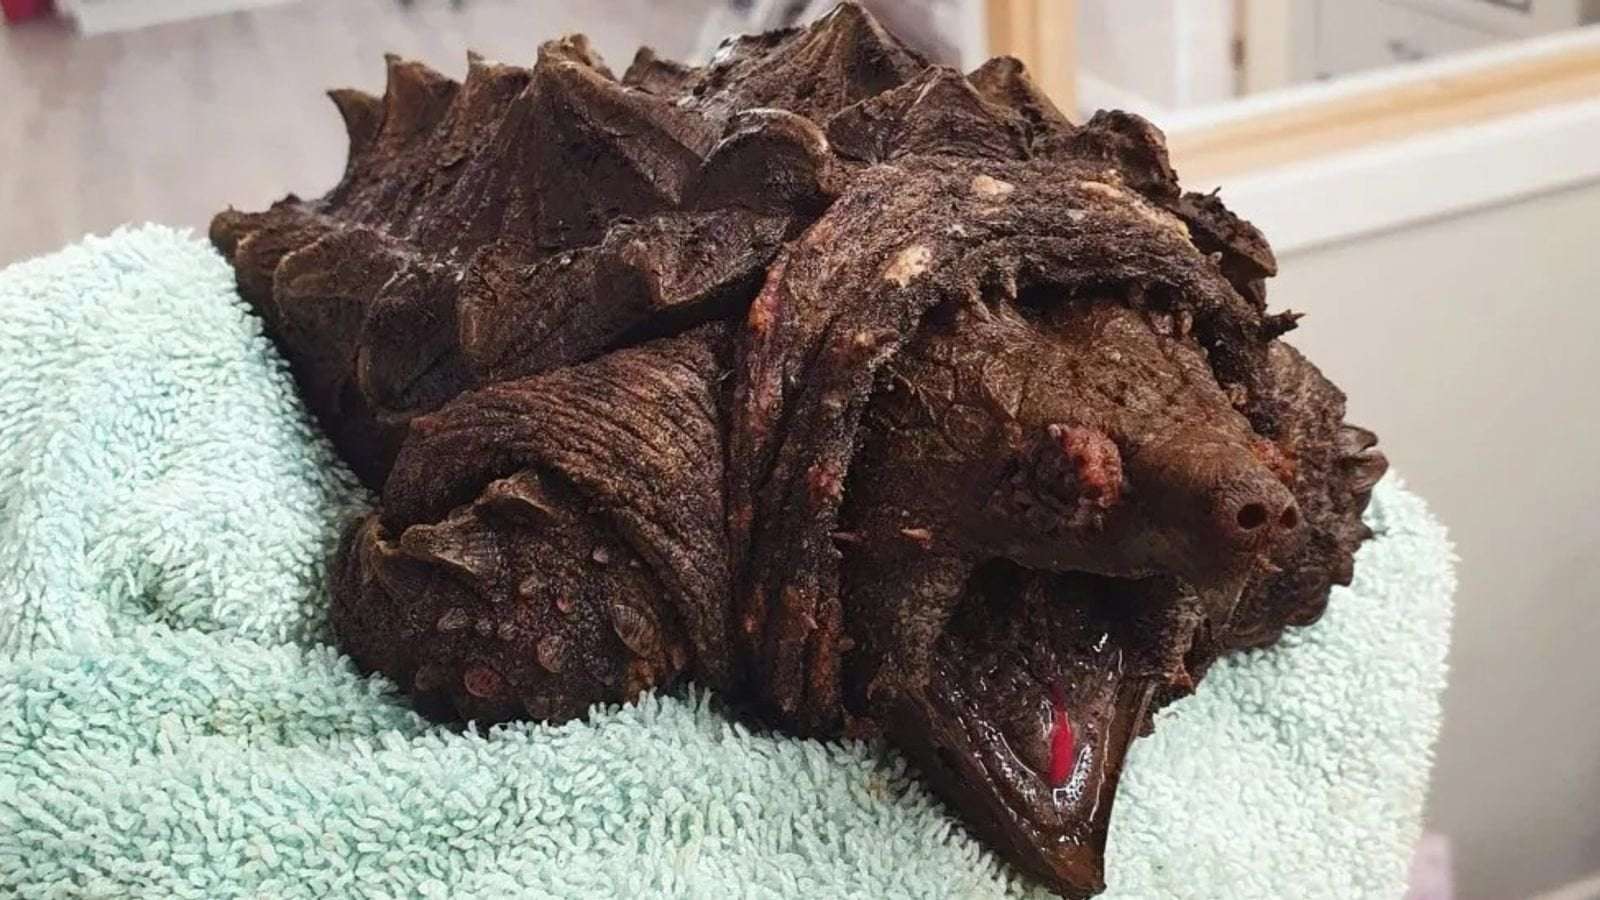 image for 'Dangerous' turtle that can bite through bone found in Cumbria